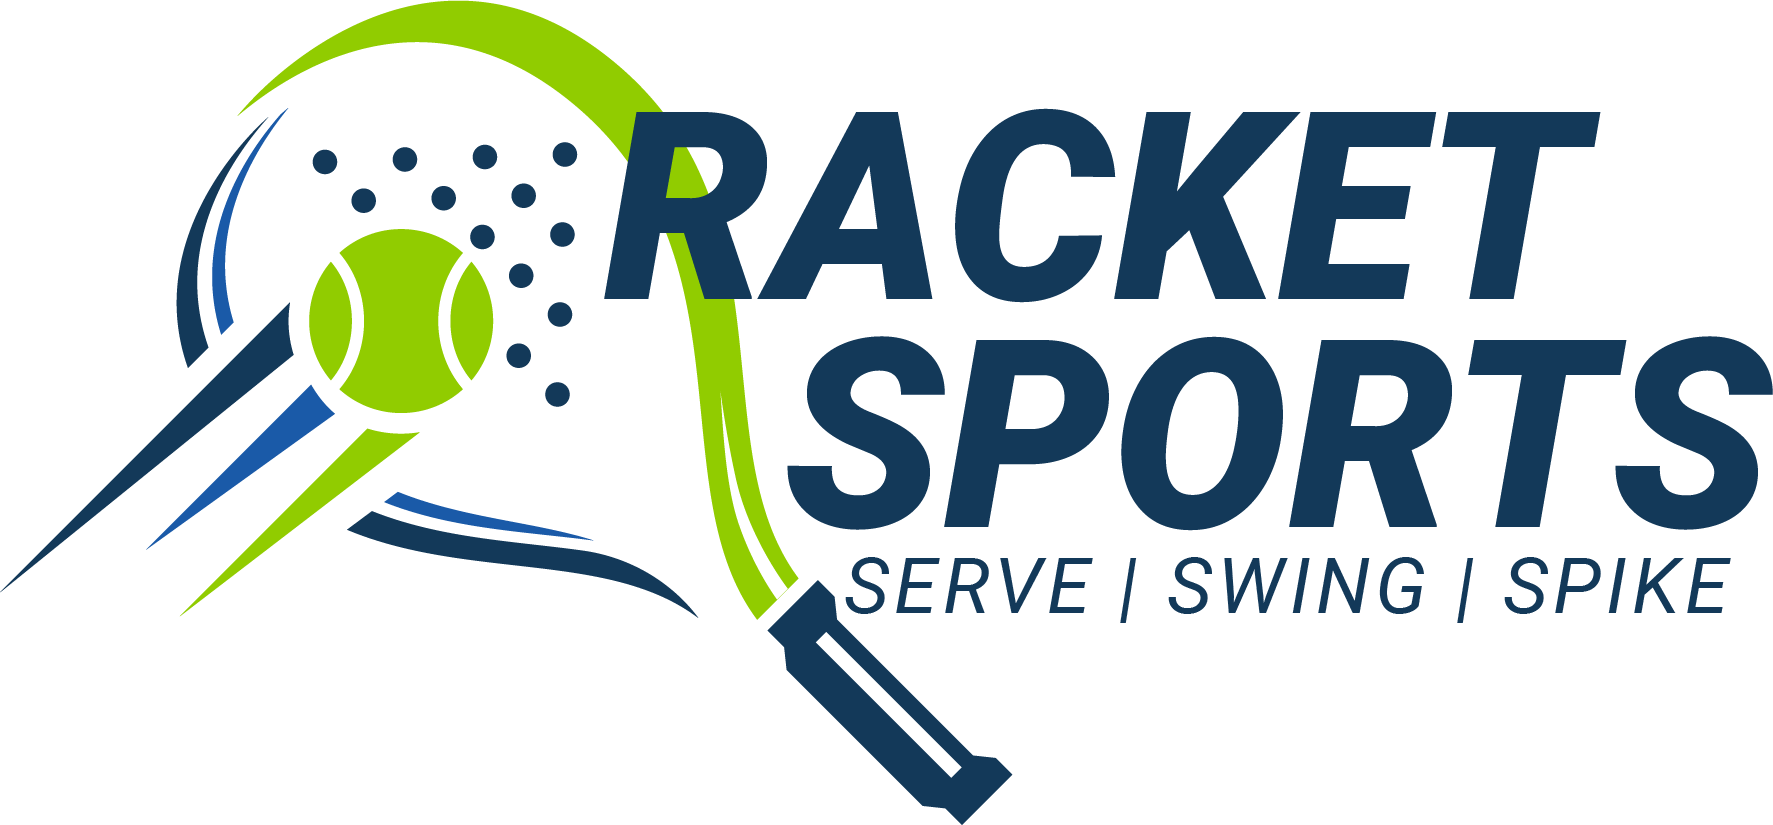 The Racket Sports Logo